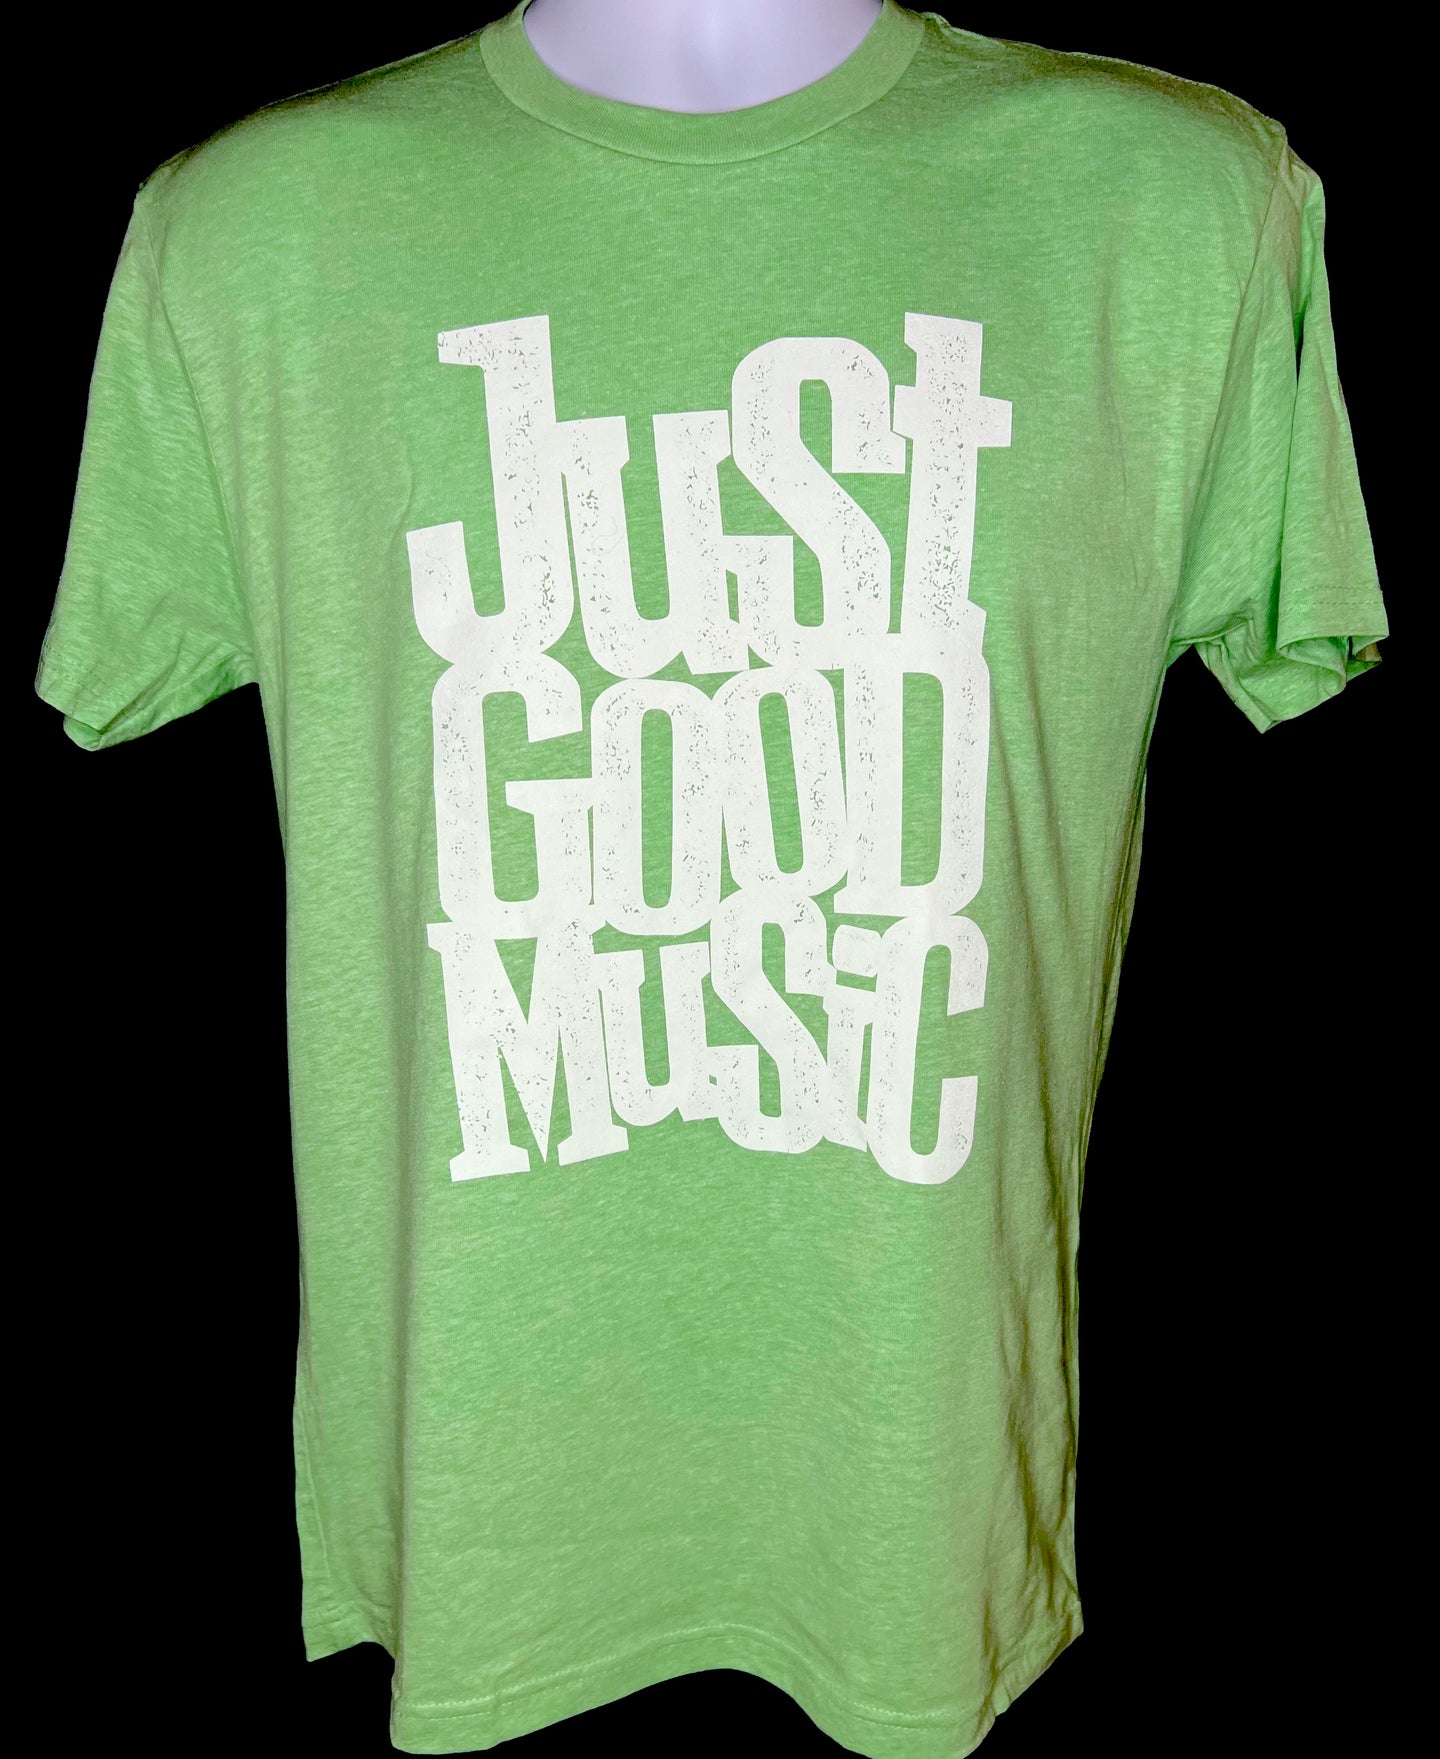 Just Good Music - Apple Green T-Shirt (Unisex)